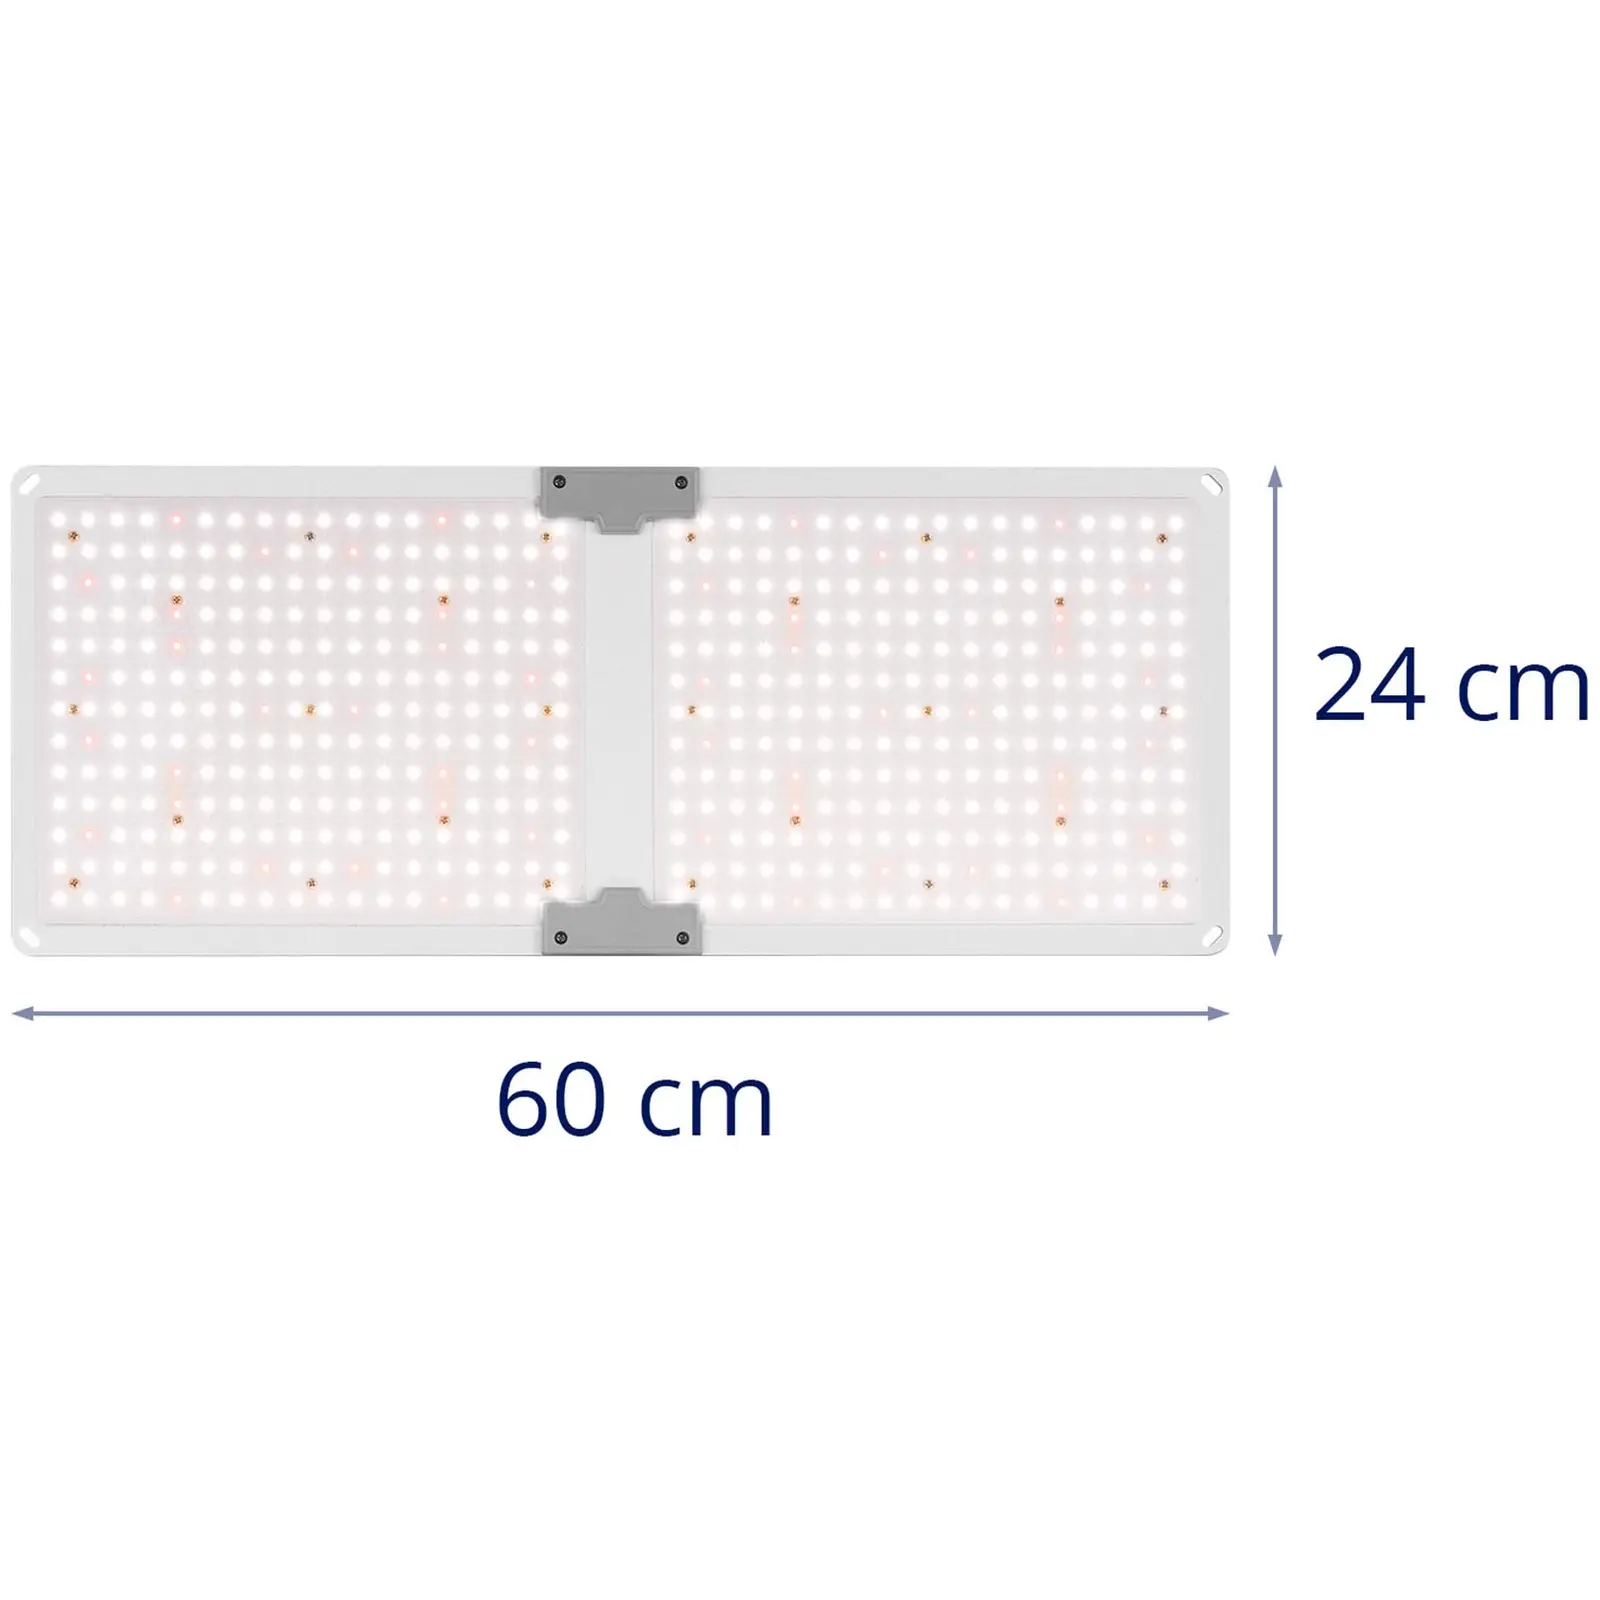 LED-Pflanzenlampe - Vollspektrum - 2,000 W - 468 LED - 20.000 Lumen